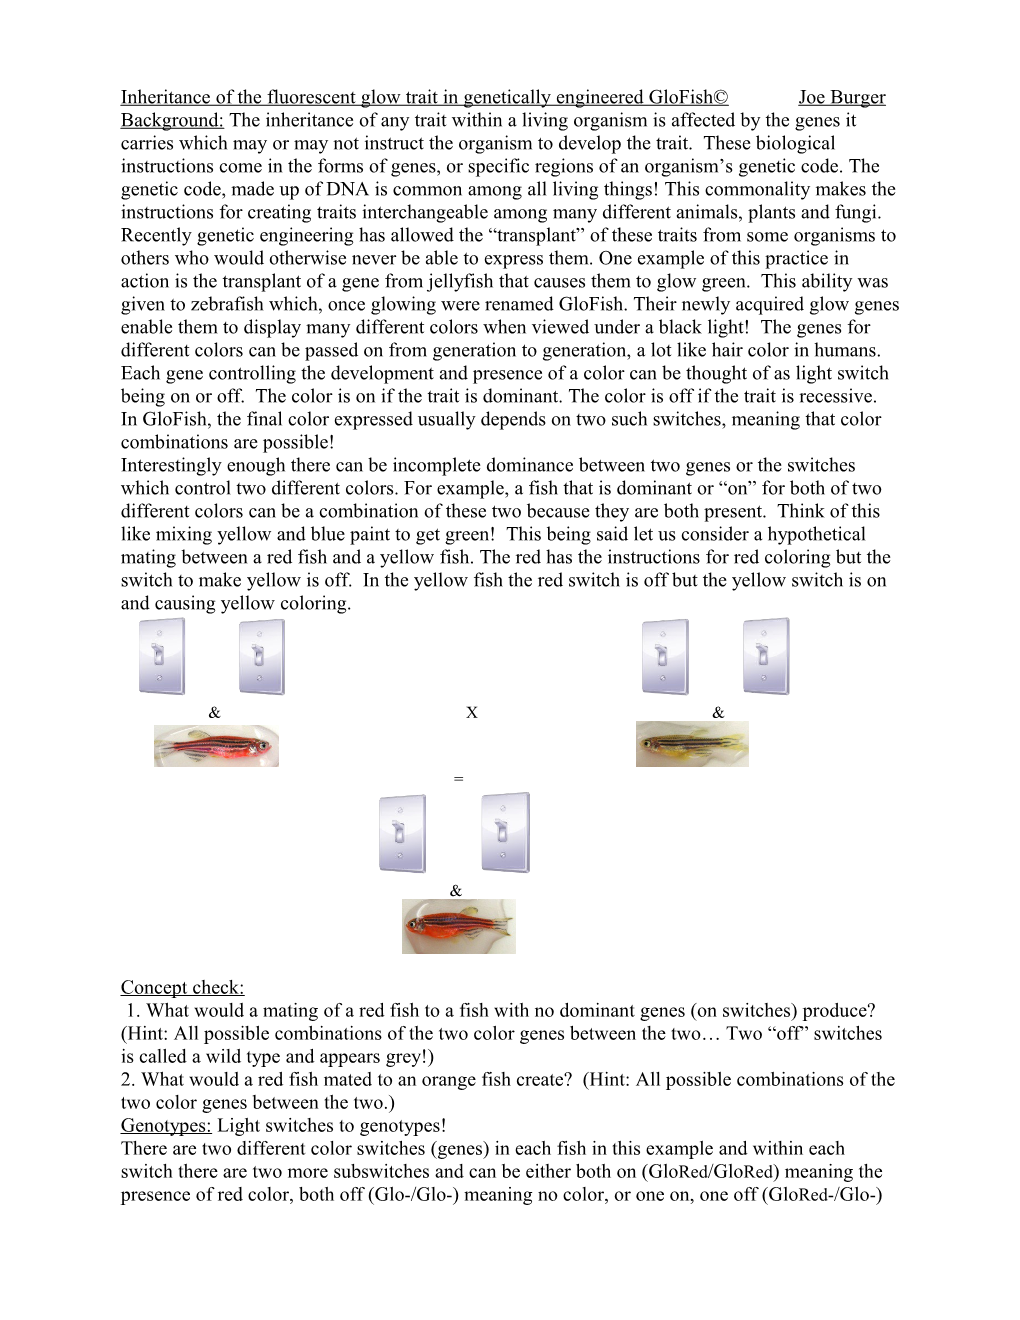 Inheritance of the Fluorescent Glow Trait in Genetically Engineered Glofish Joe Burger